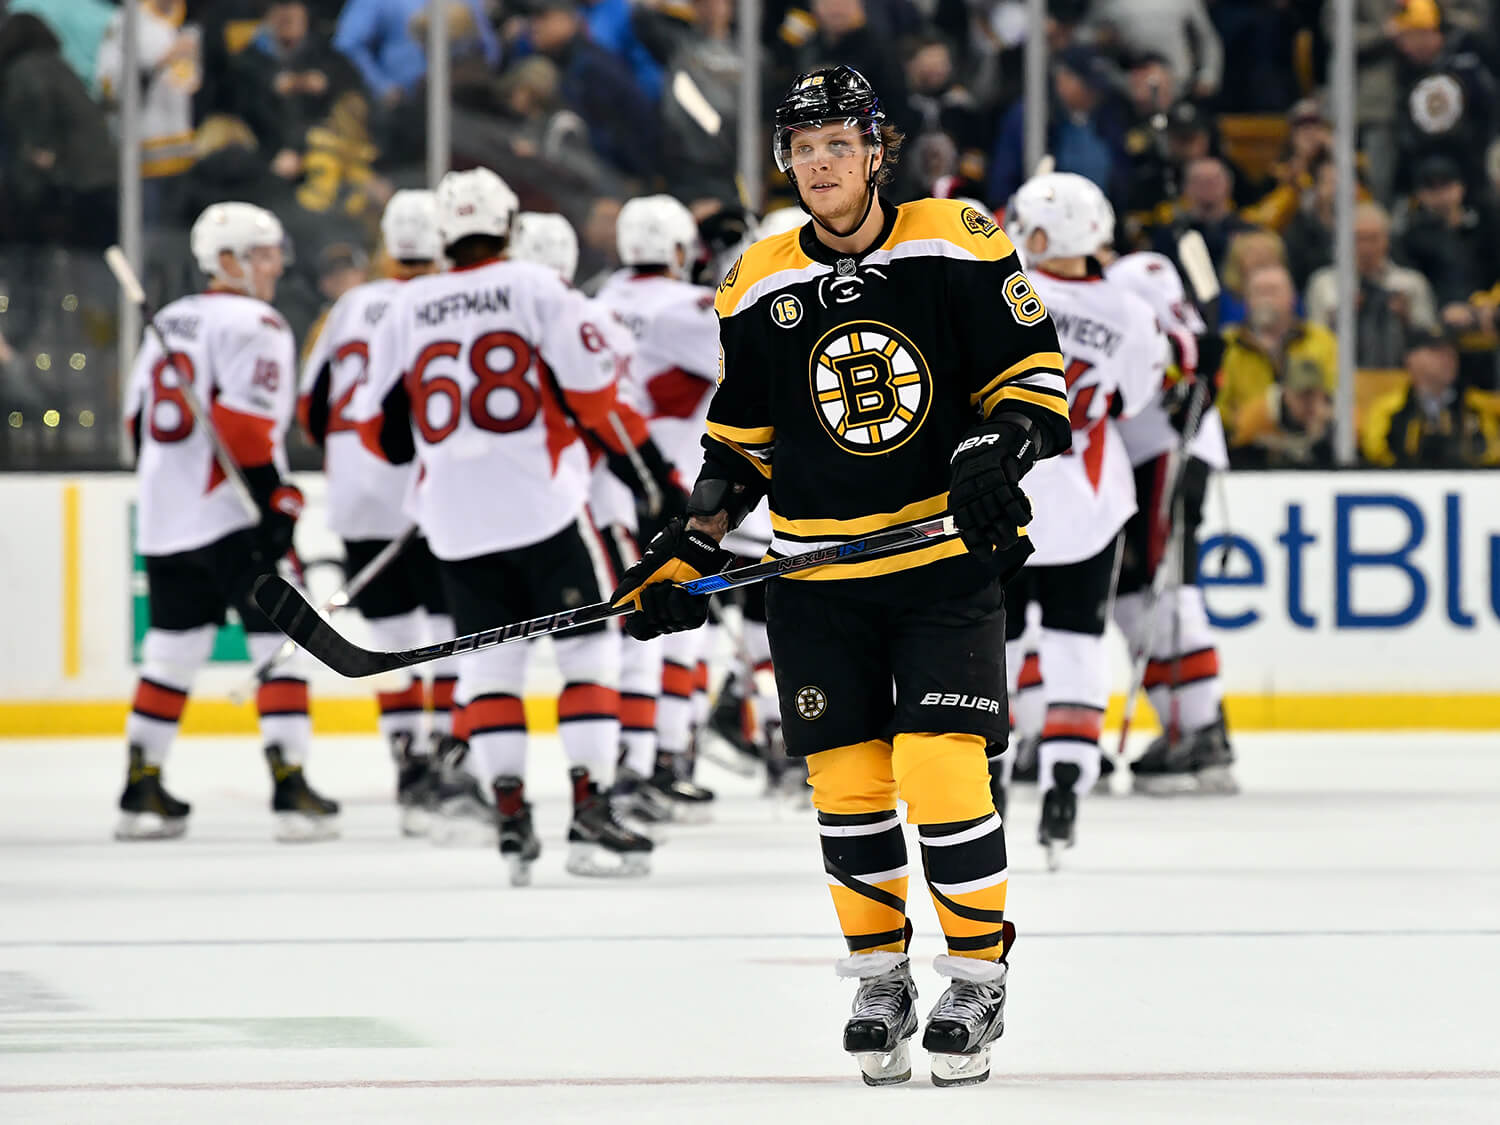 Photo Gallery: Senators vs Bruins (4/6/17)